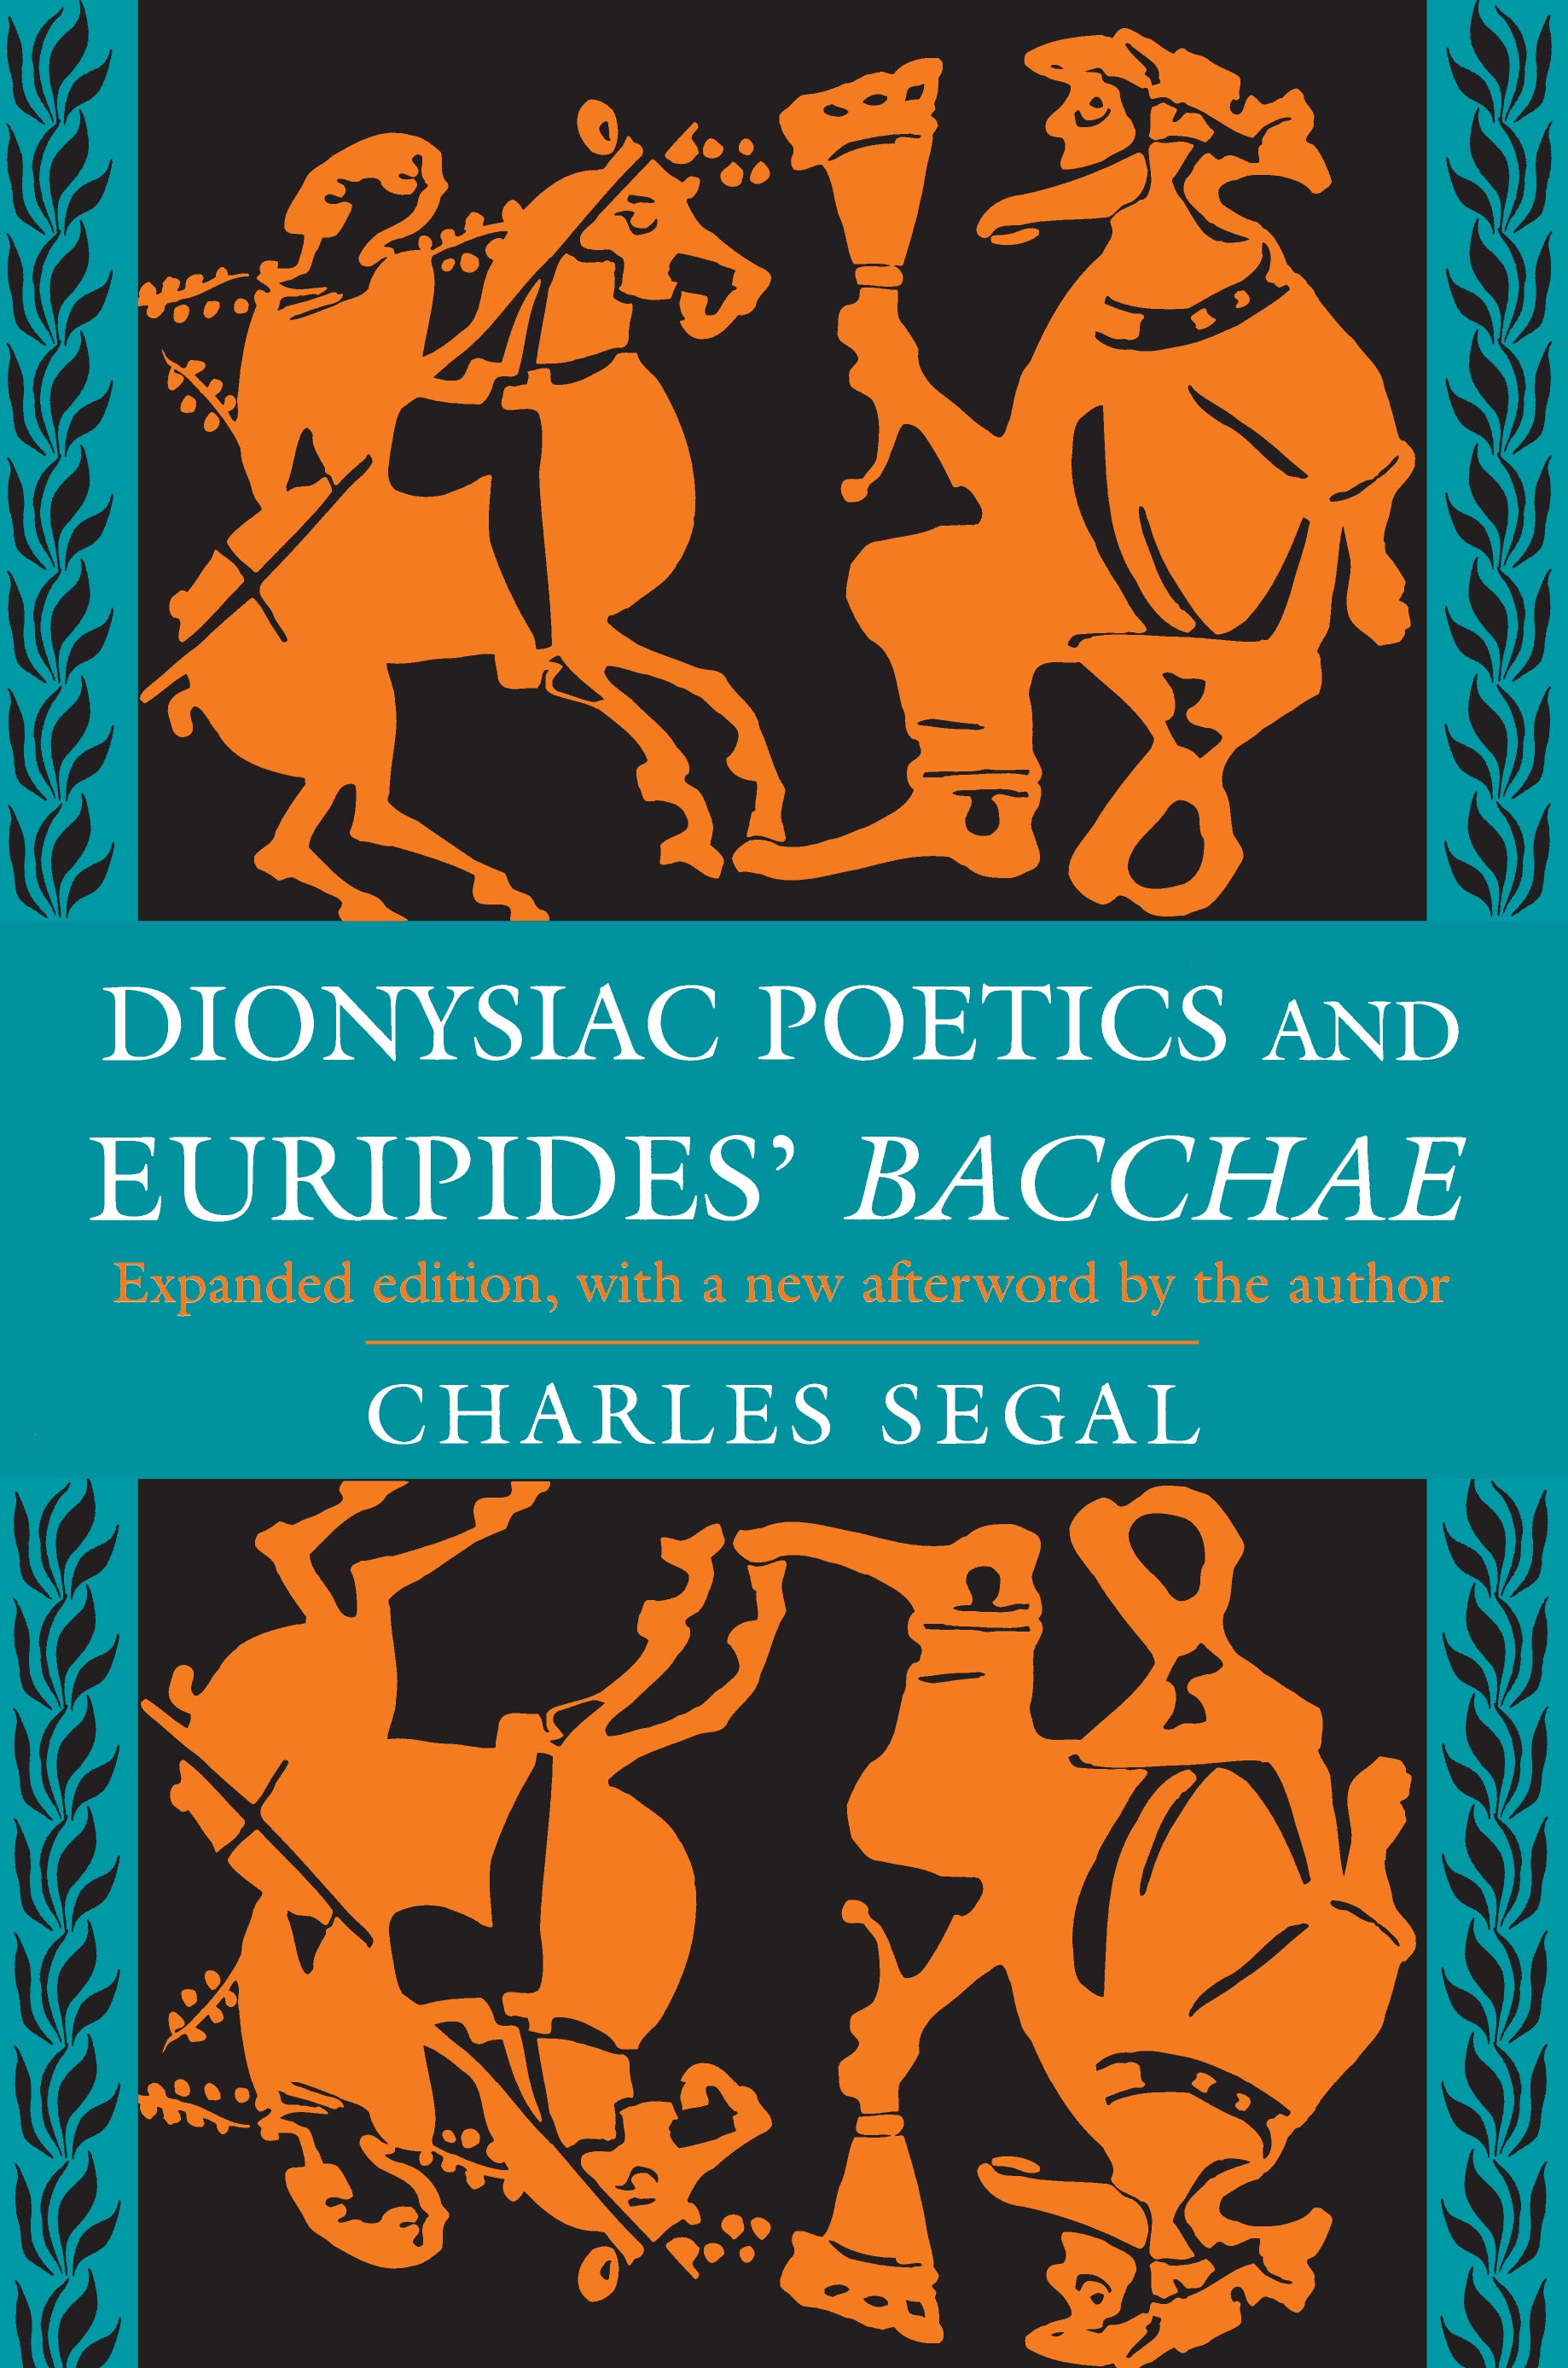 Dionysiac Poetics and Euripides' Bacchae - 50-99.99